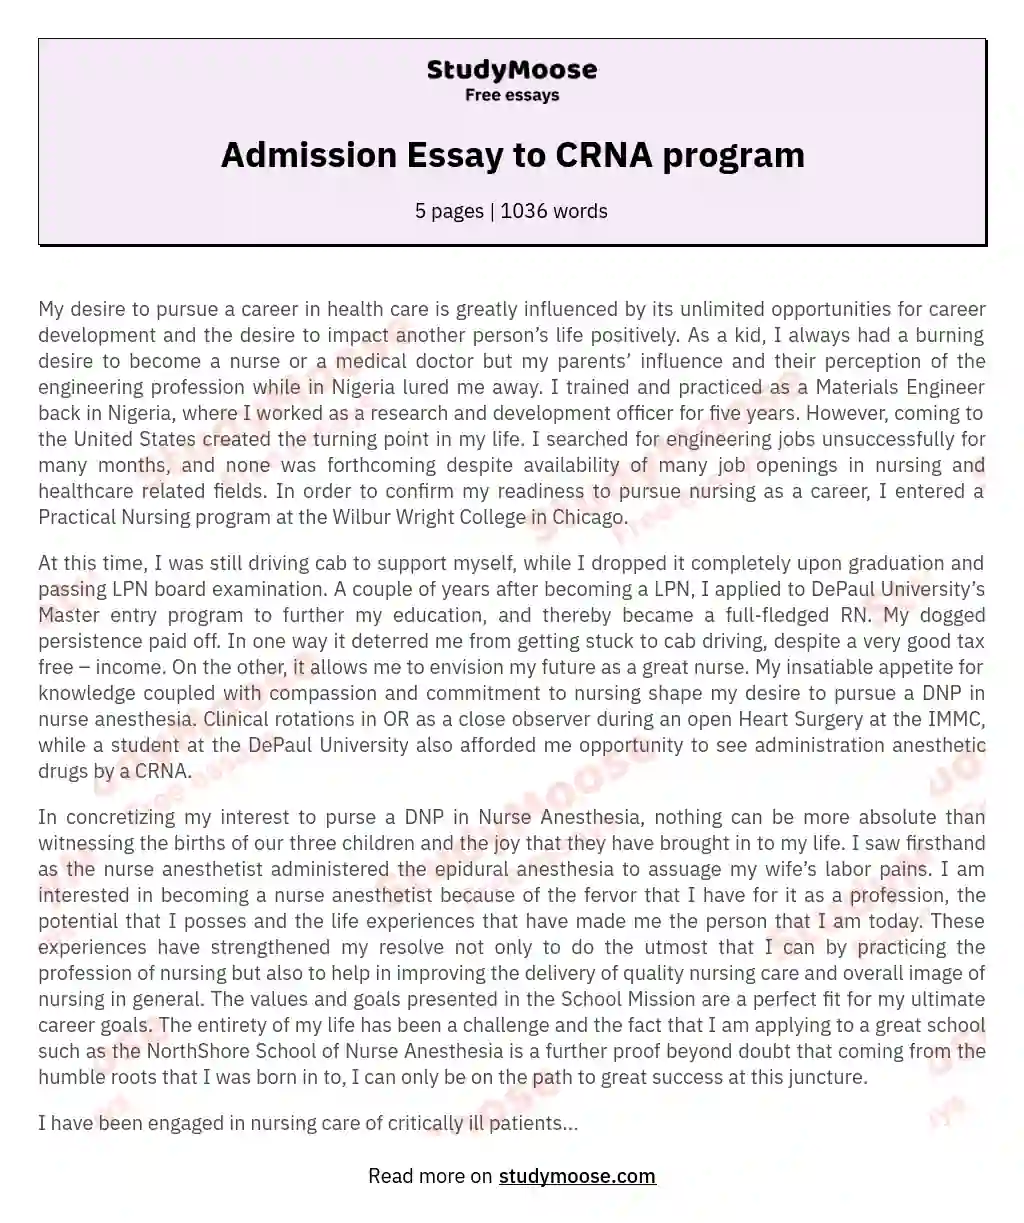 Admission Essay to CRNA program essay